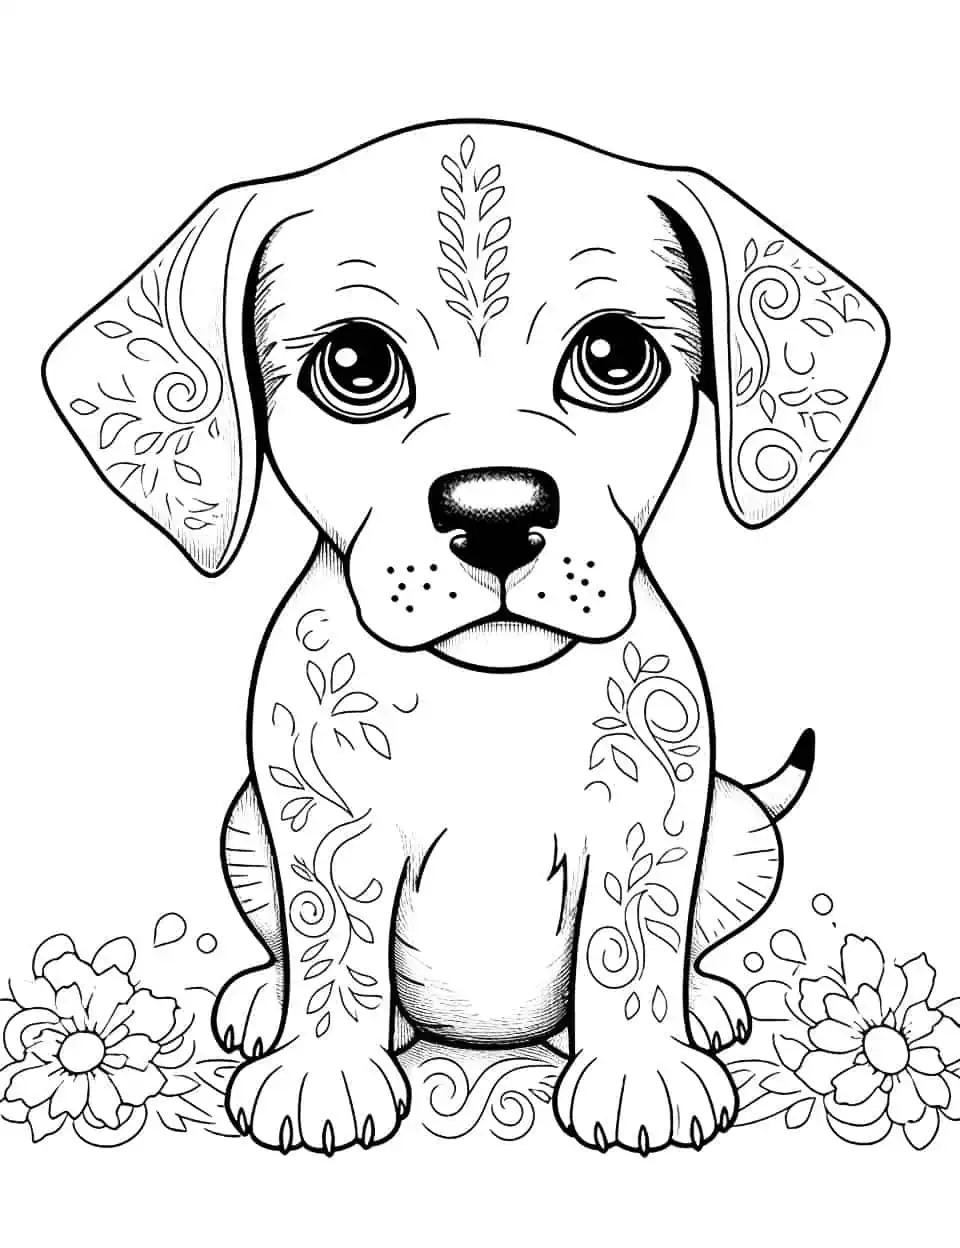 Mandala and Beagle Mix Dog Coloring Page - A friendly Beagle sitting in the center of a beautiful mandala pattern.